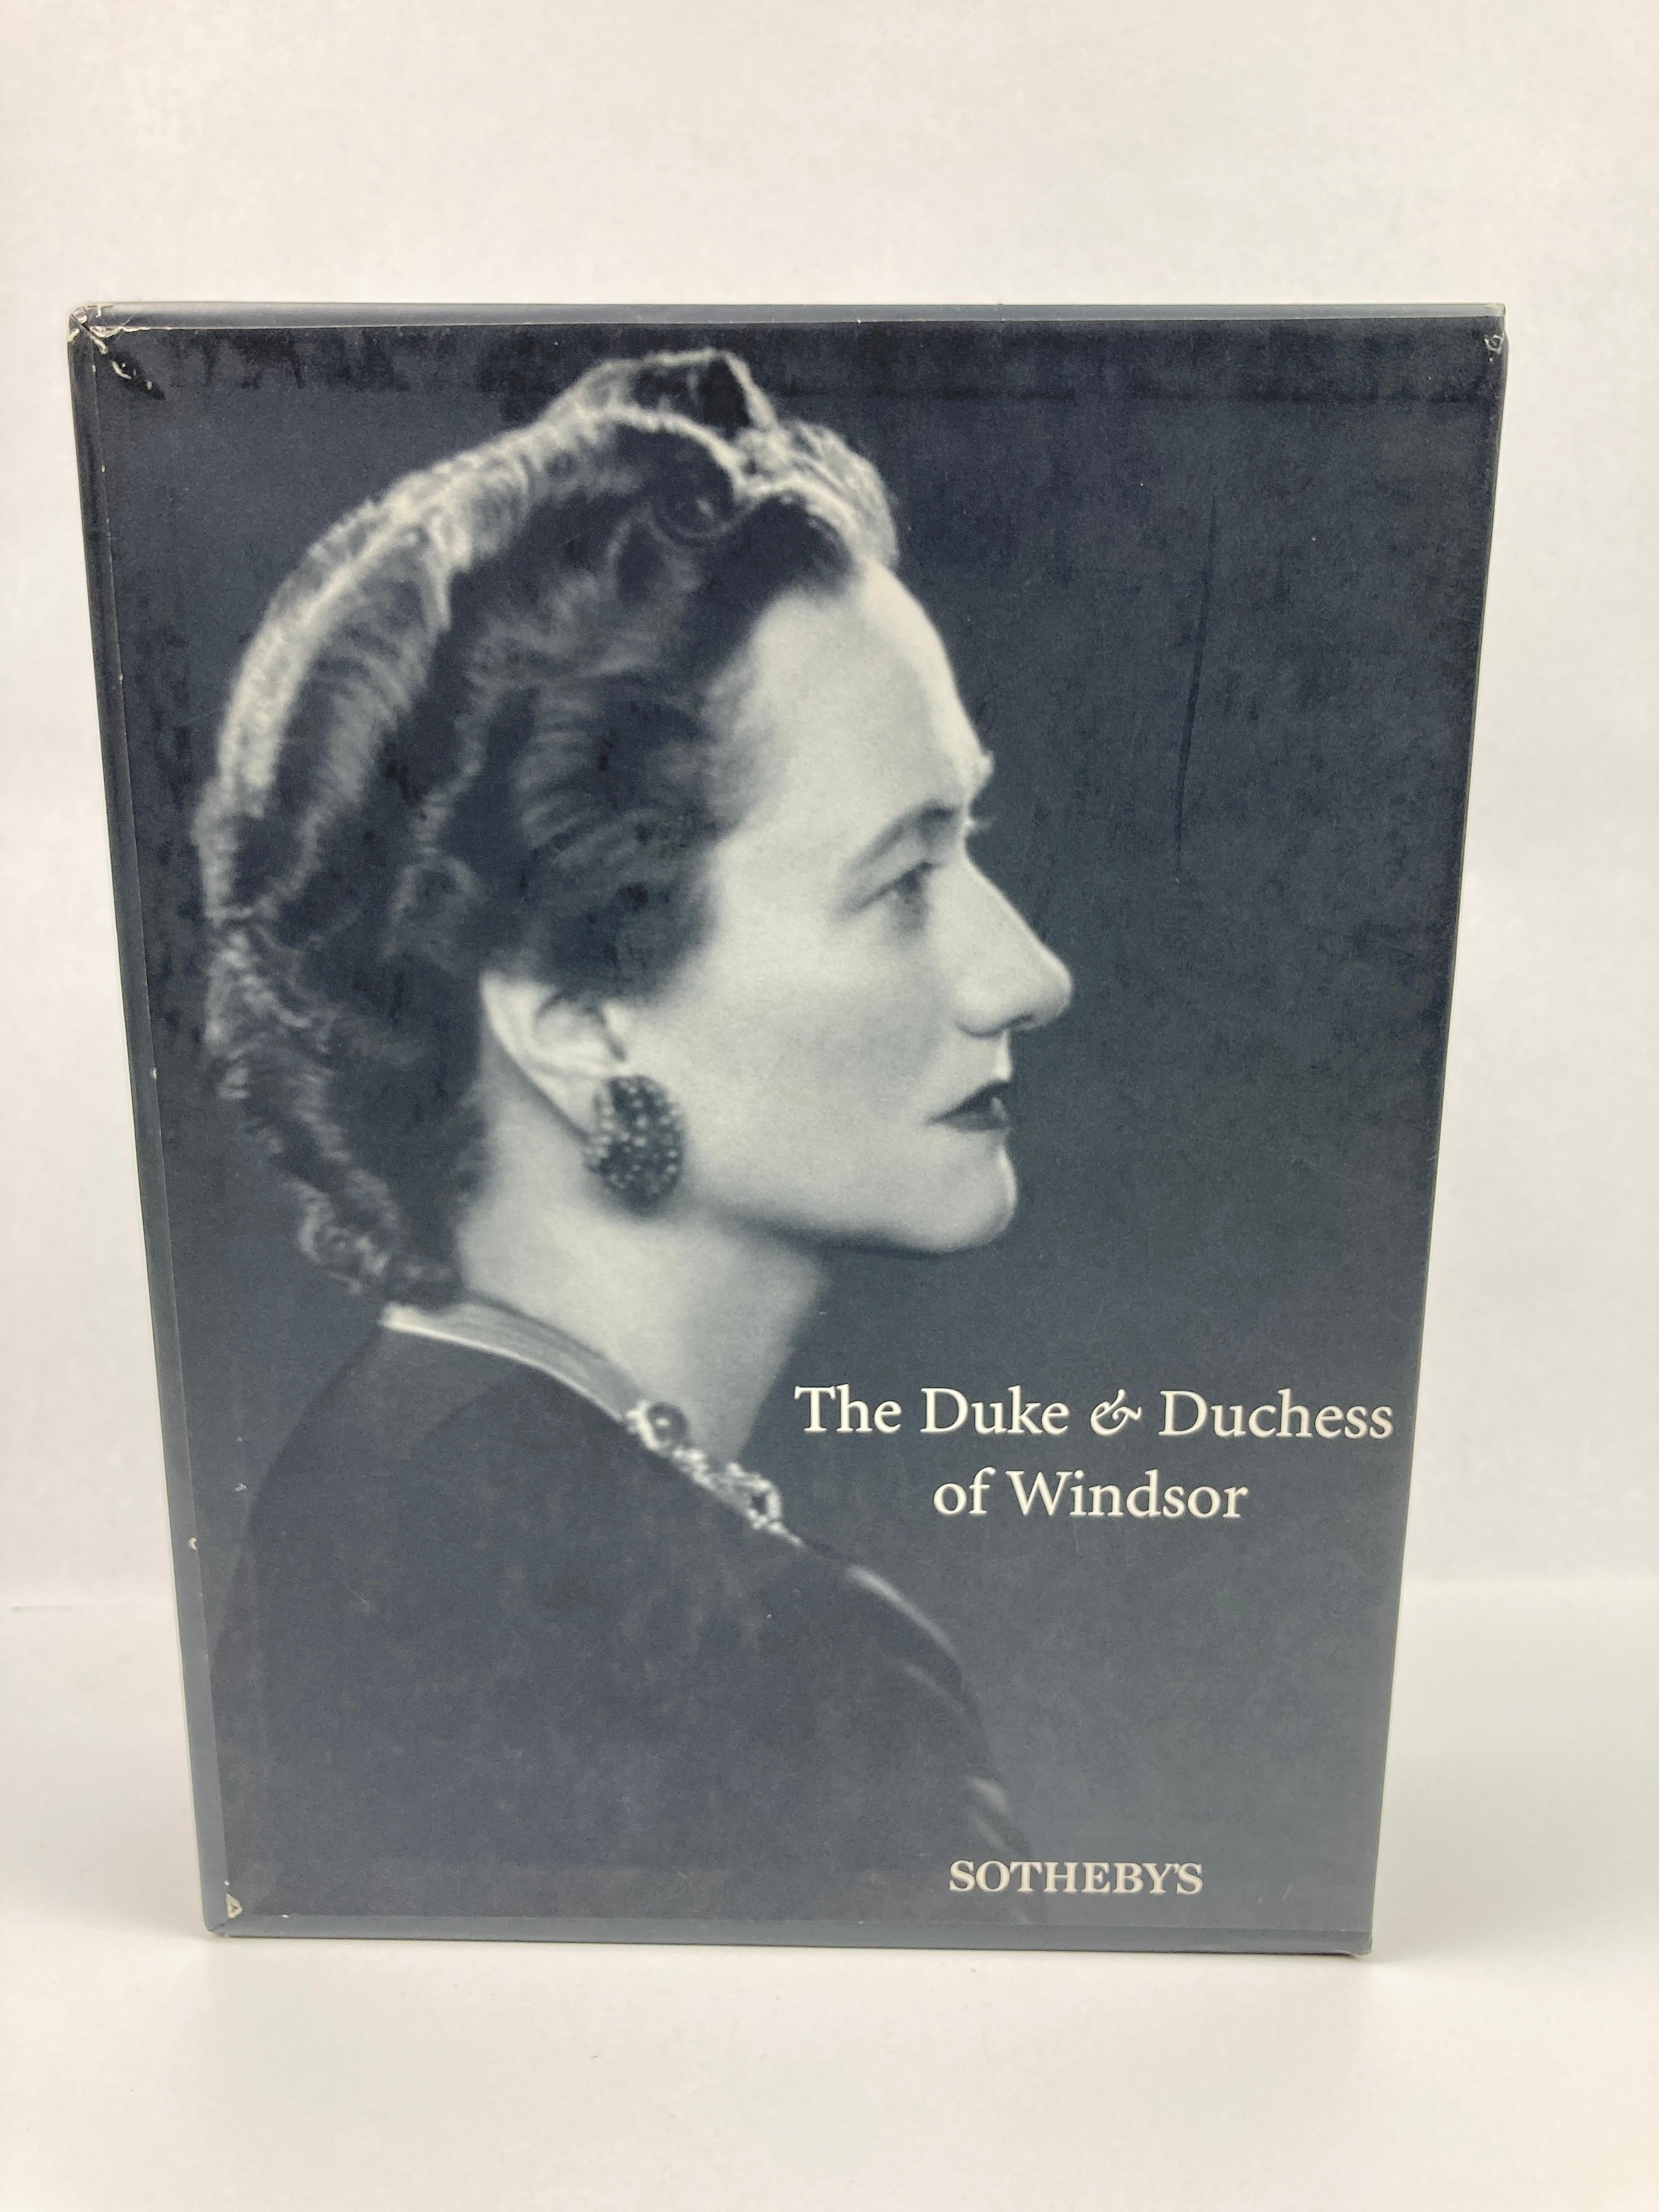 The Duke and Duchess of Windsor Auction Sothebys Books Catalogs in Slipcase Box 3